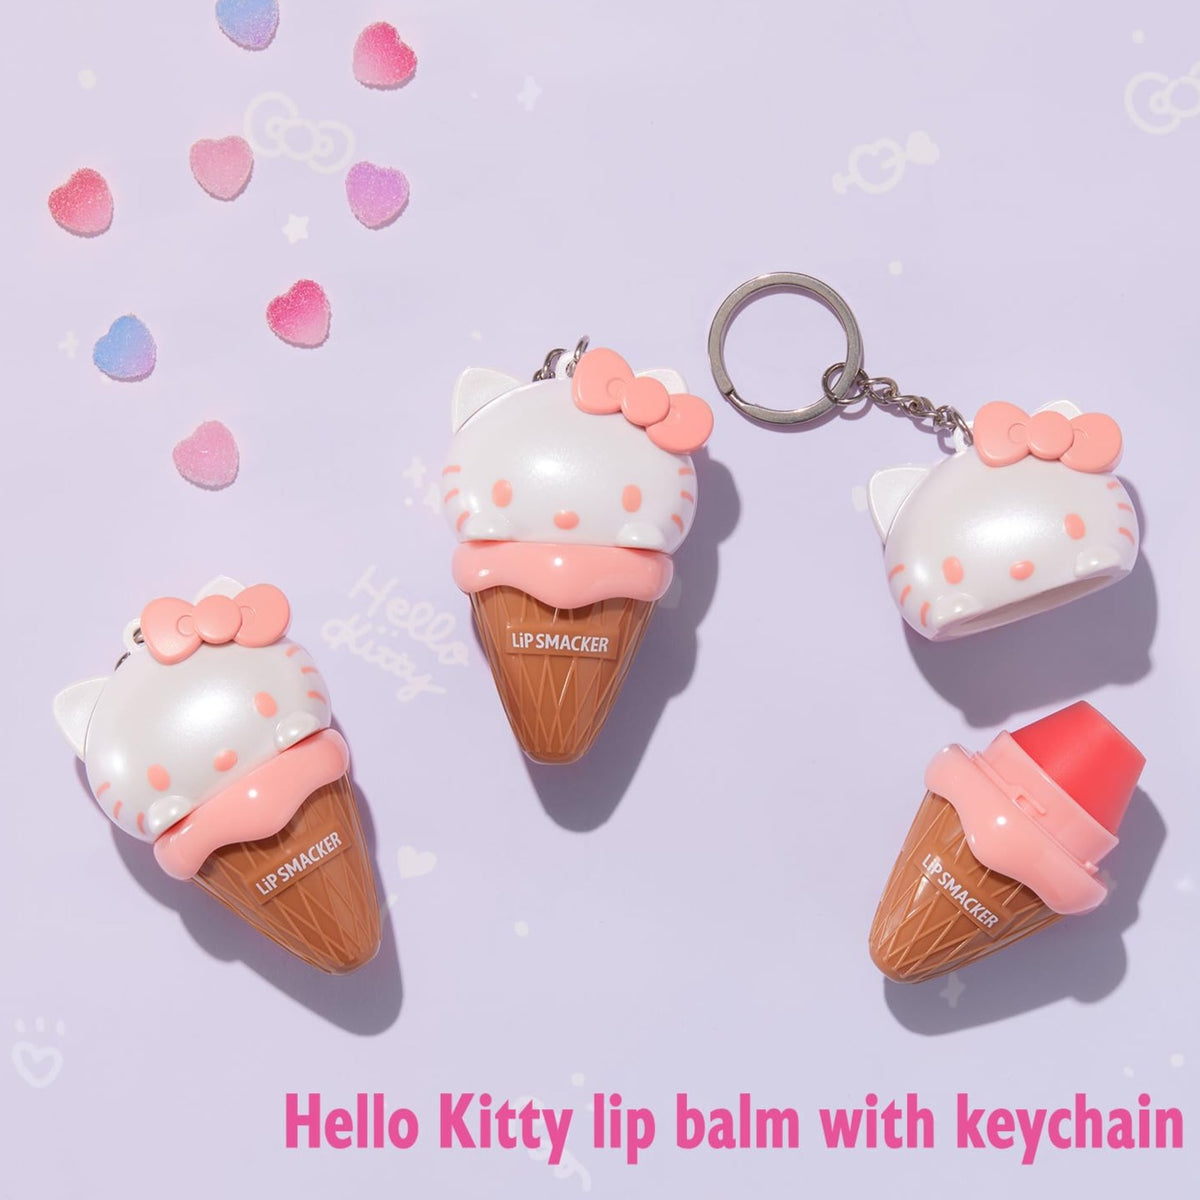 Hello Kitty x Lip Smacker Ice Cream Lip Balm (50th Anniversary) Beauty MARKWINS   